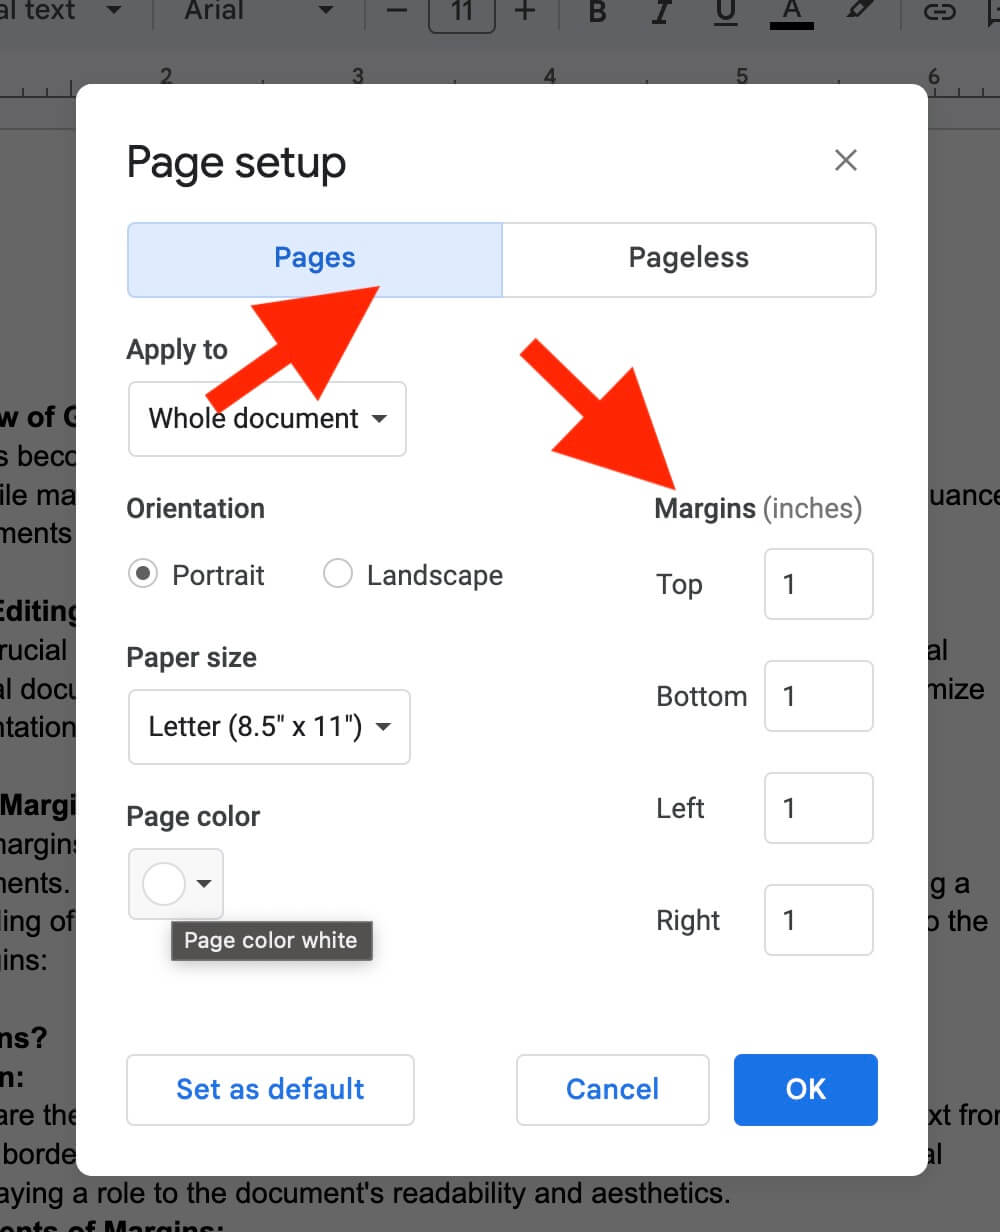 How to Edit Margins in Google Docs